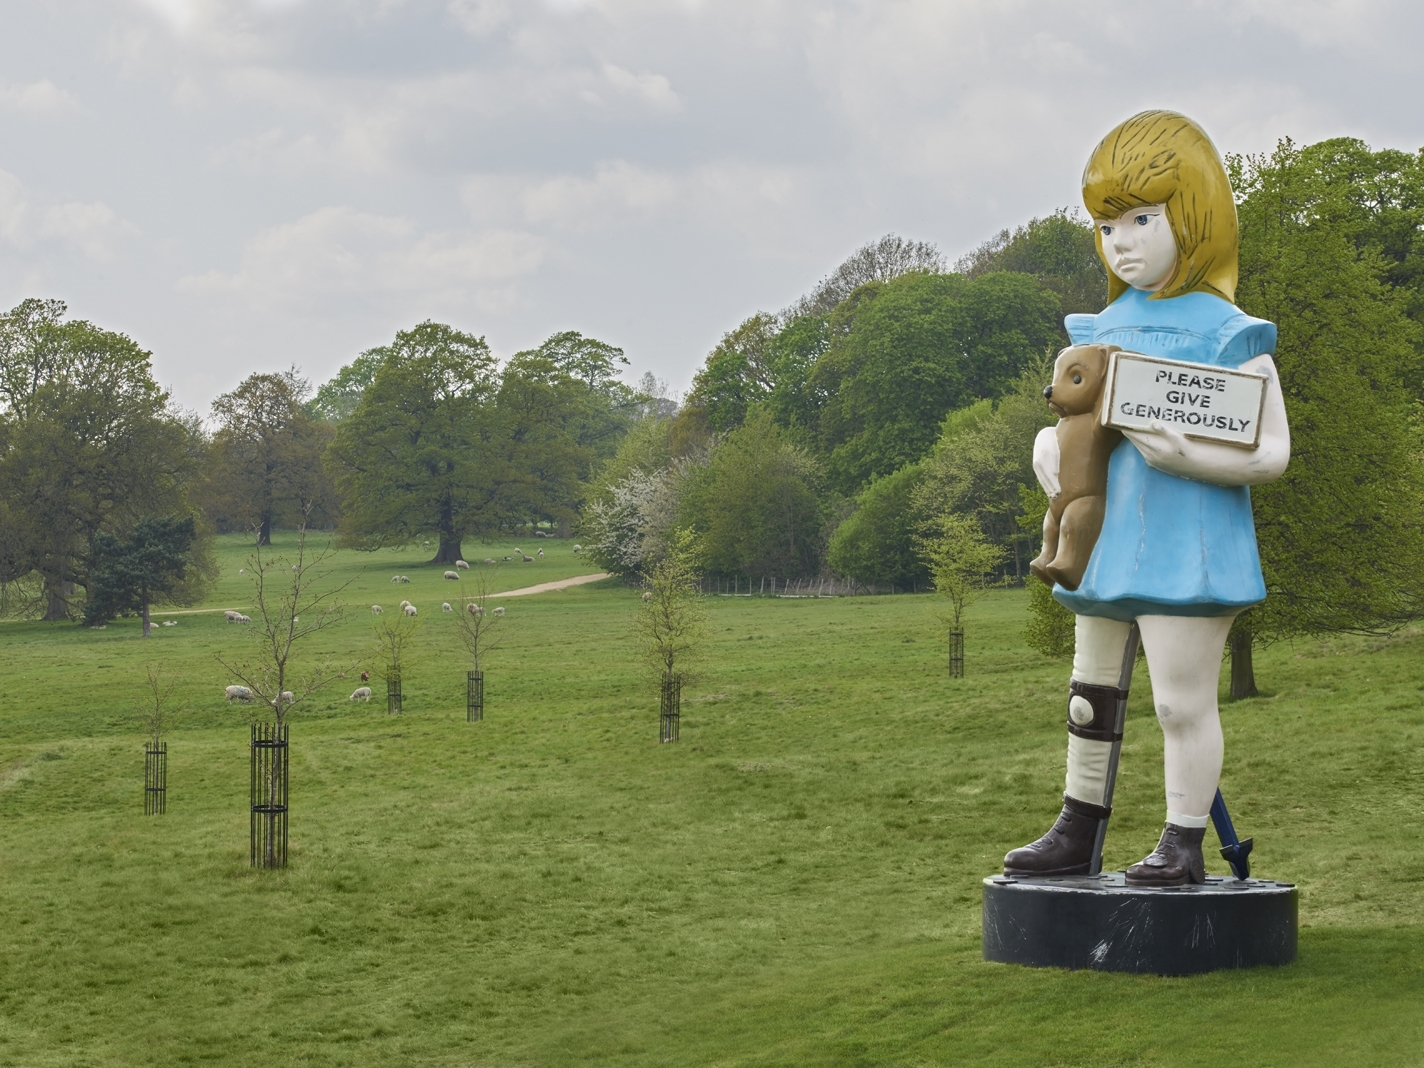 Damien Hirst at Yorkshire Sculpture Park | Creative Tourist